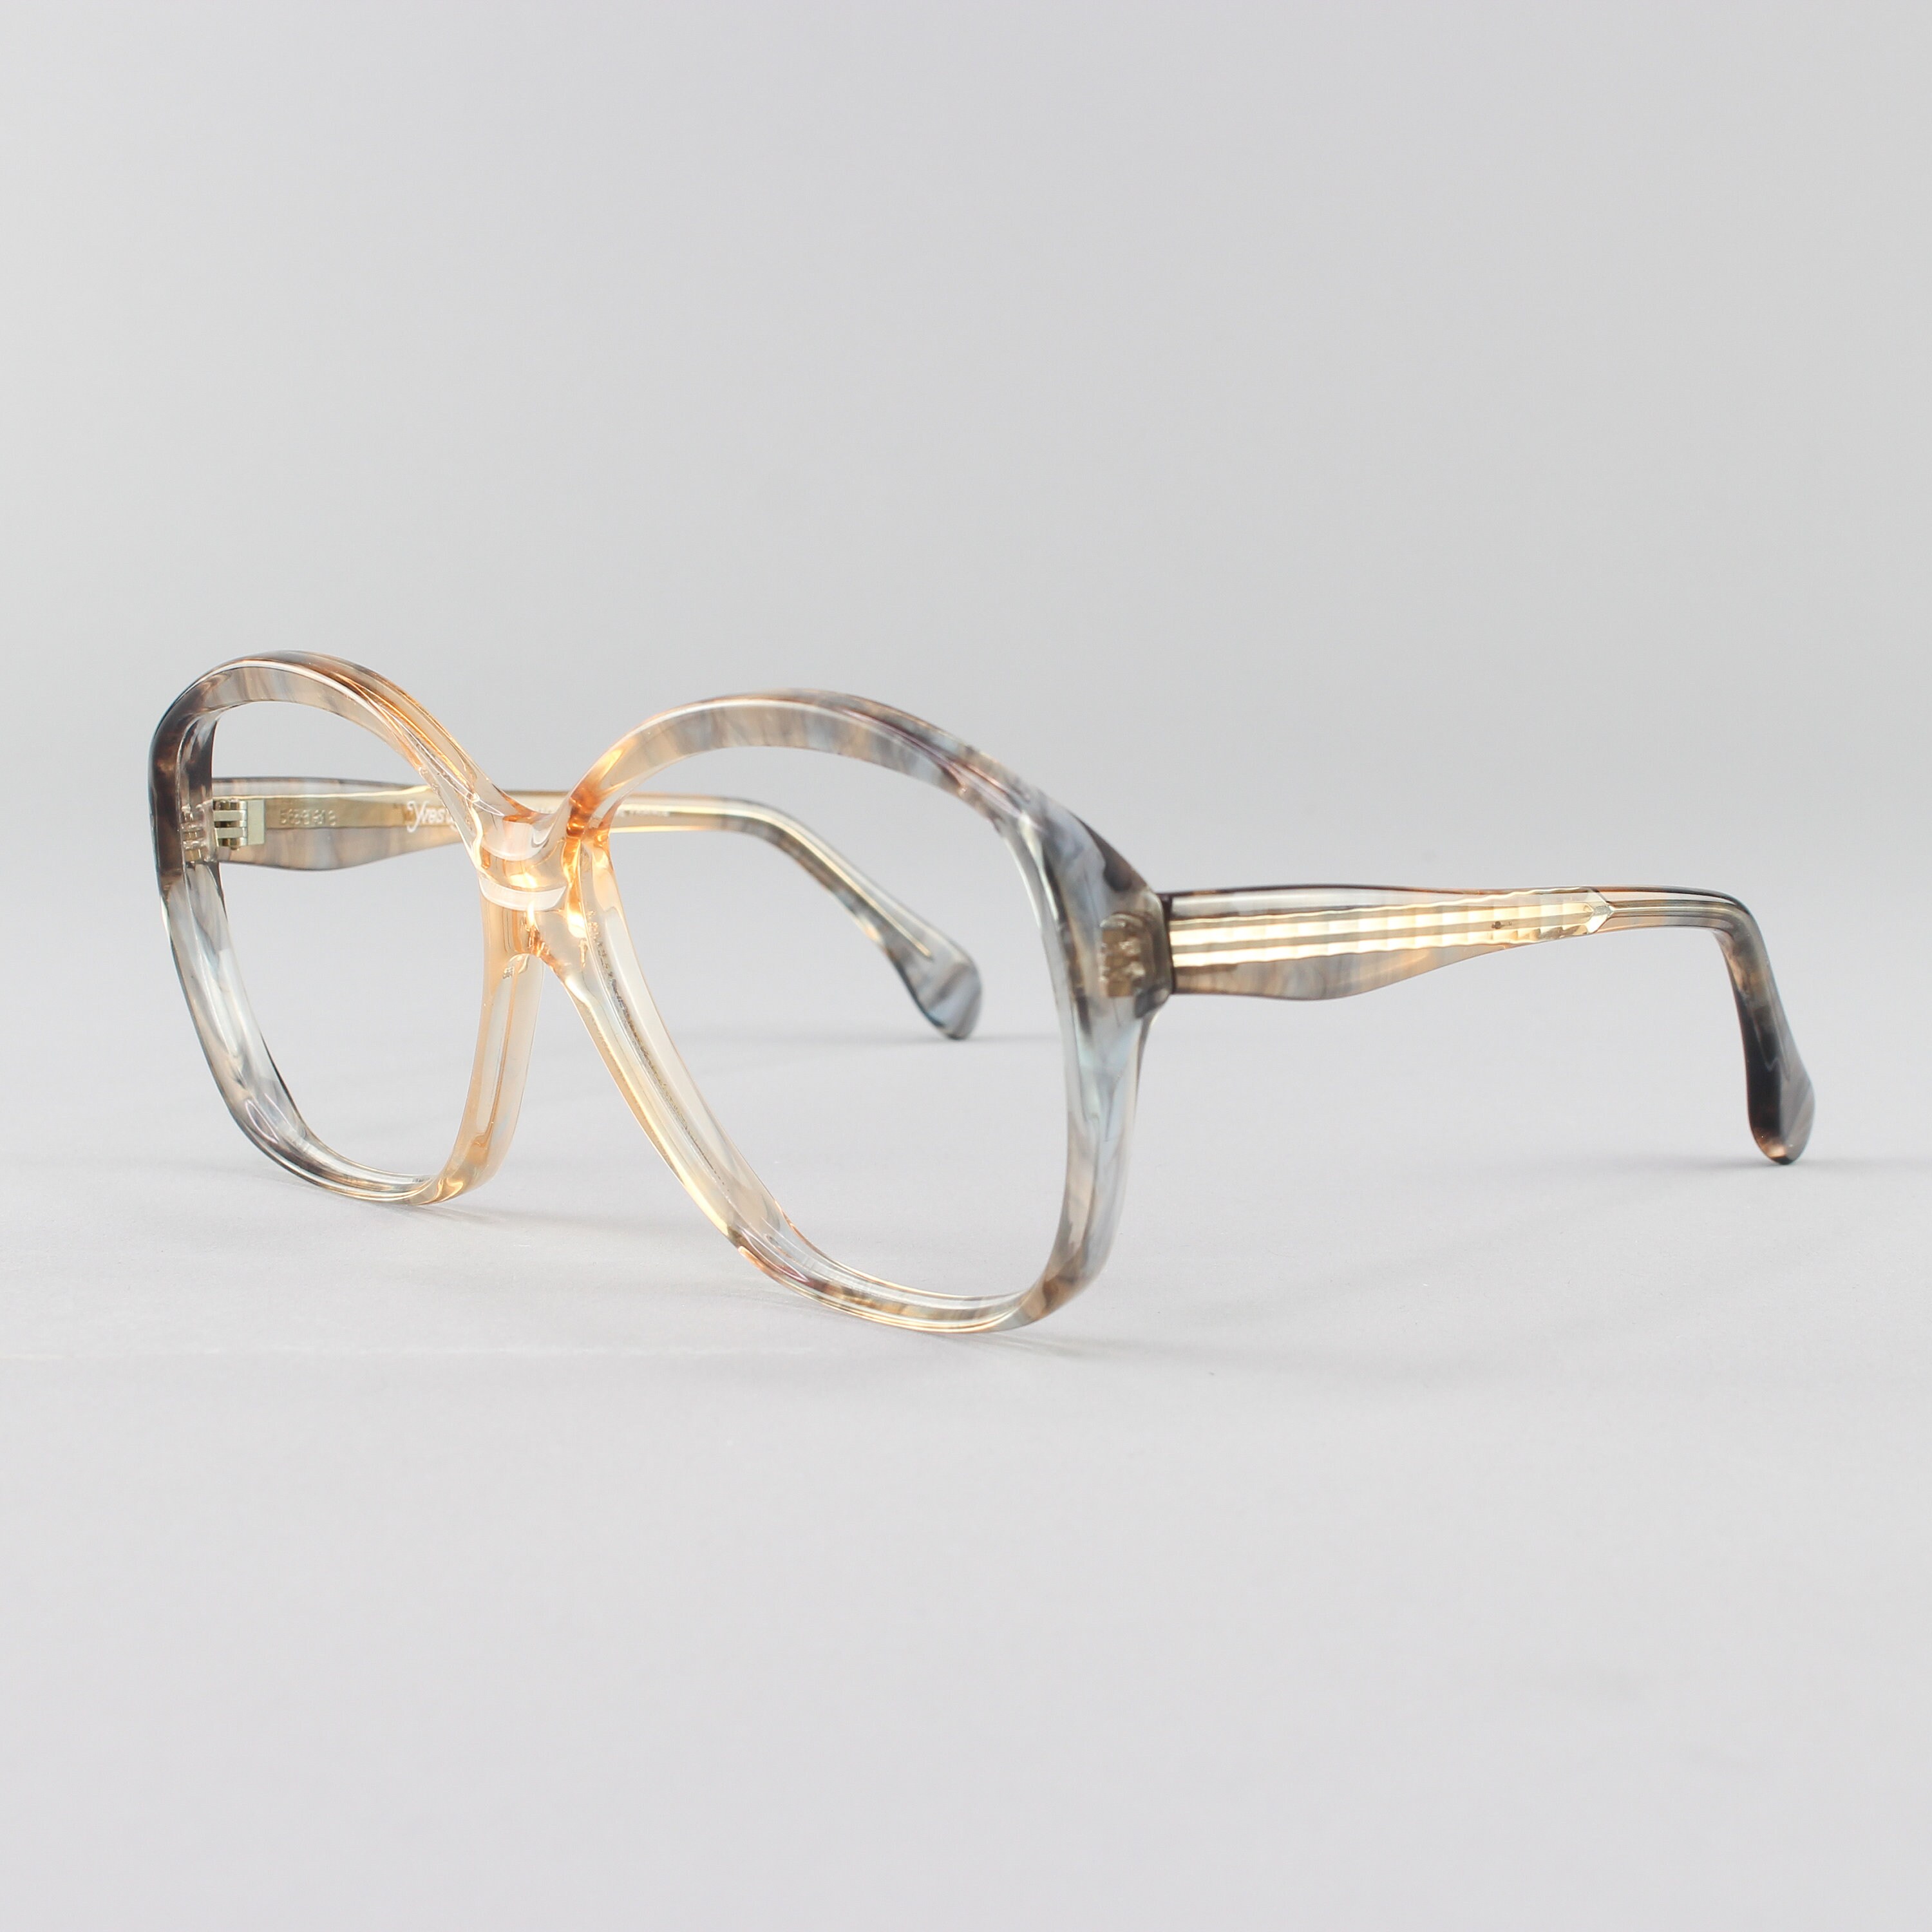 Vintage Eyeglasses 80s Glasses 1980s Oversized Round Eyeglass Frame